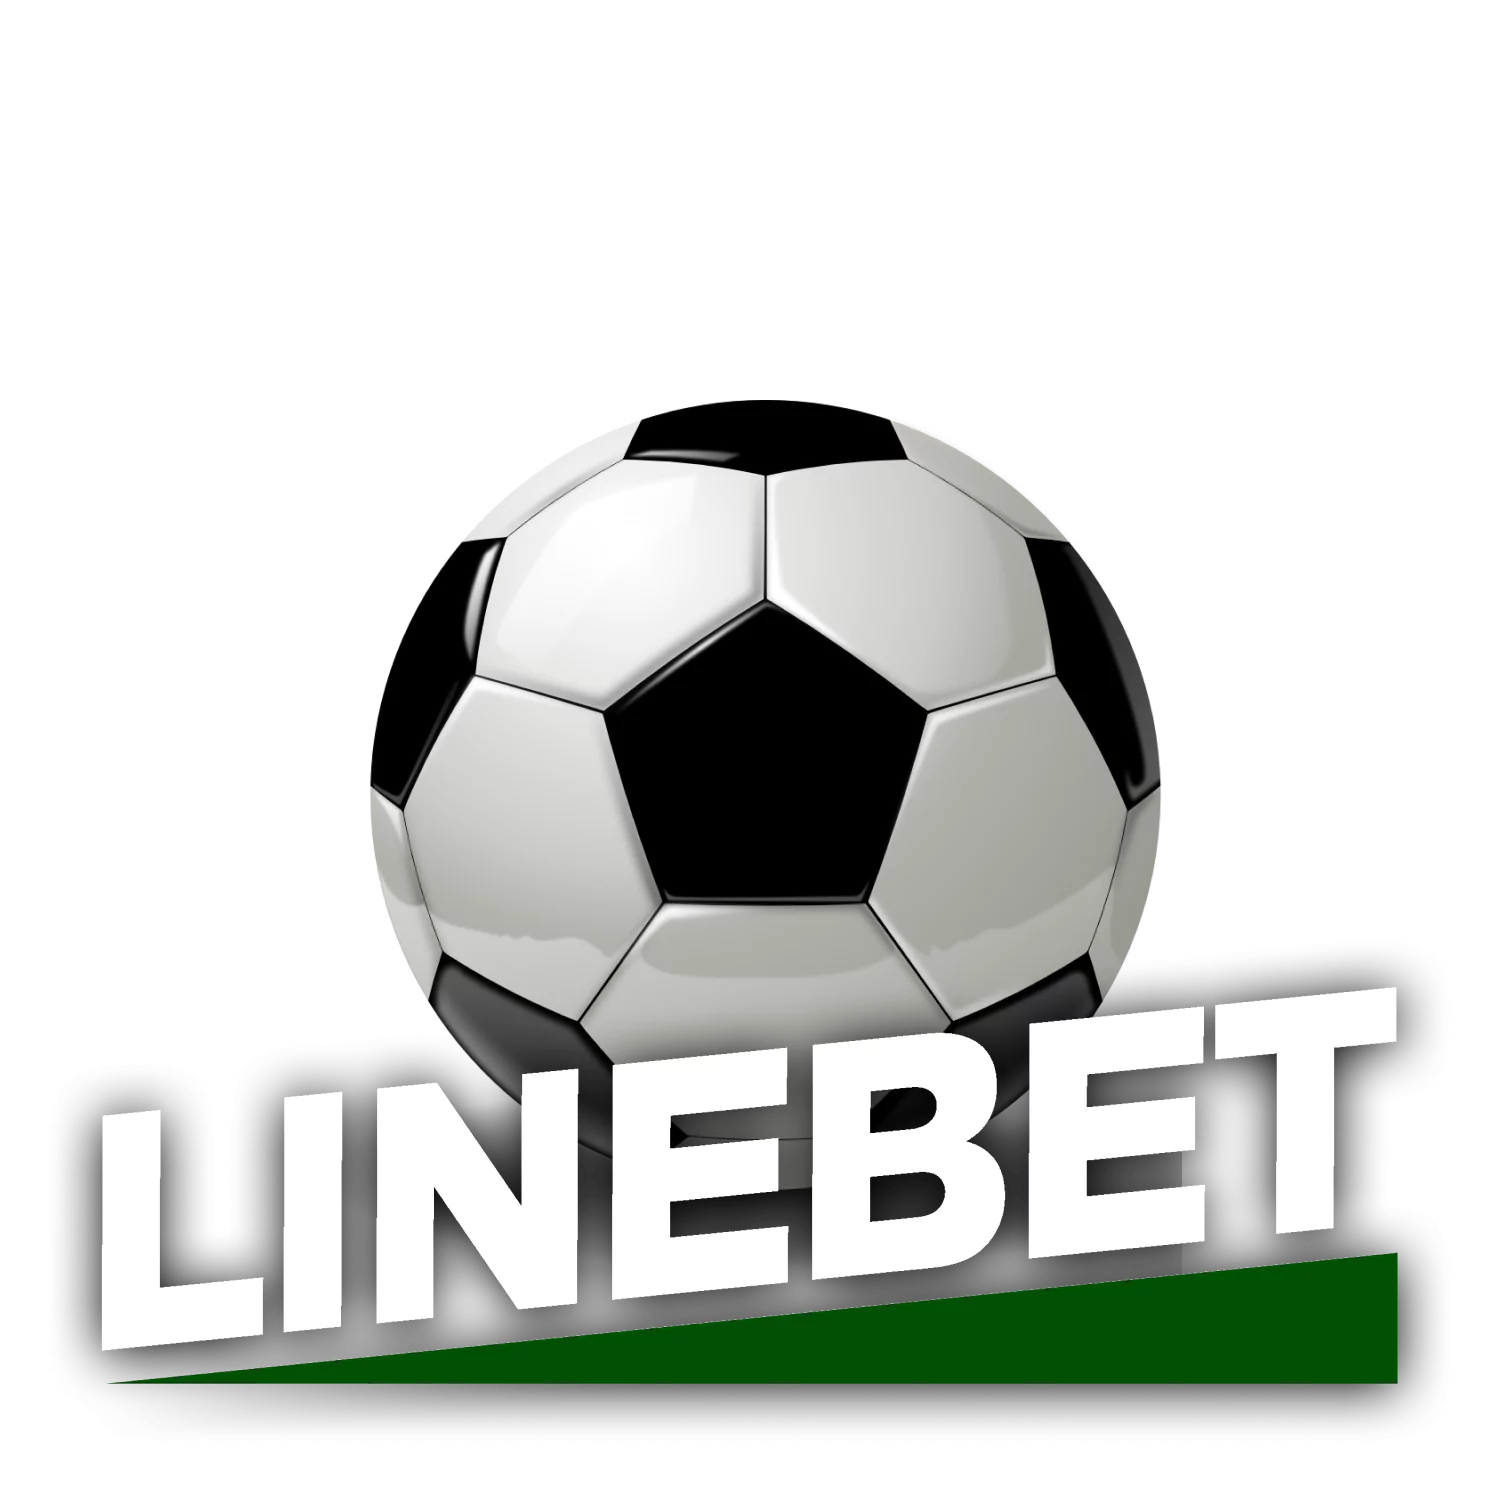 Make bets on virtual football with Linebet.